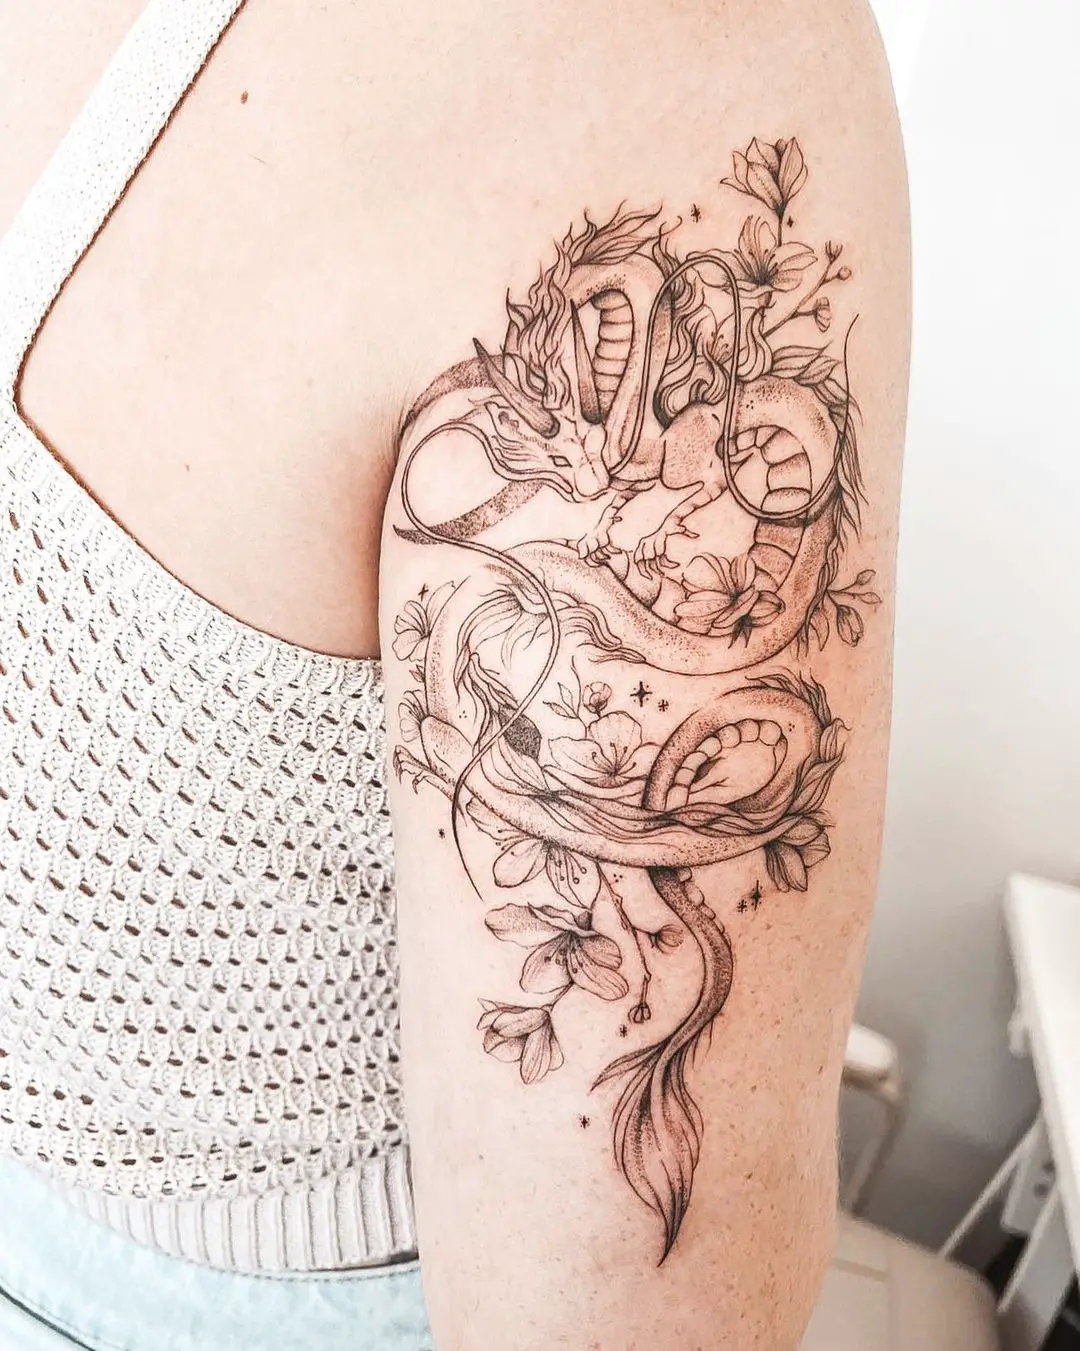 Floral dragon tattoo by xanadenruyter.tattoo